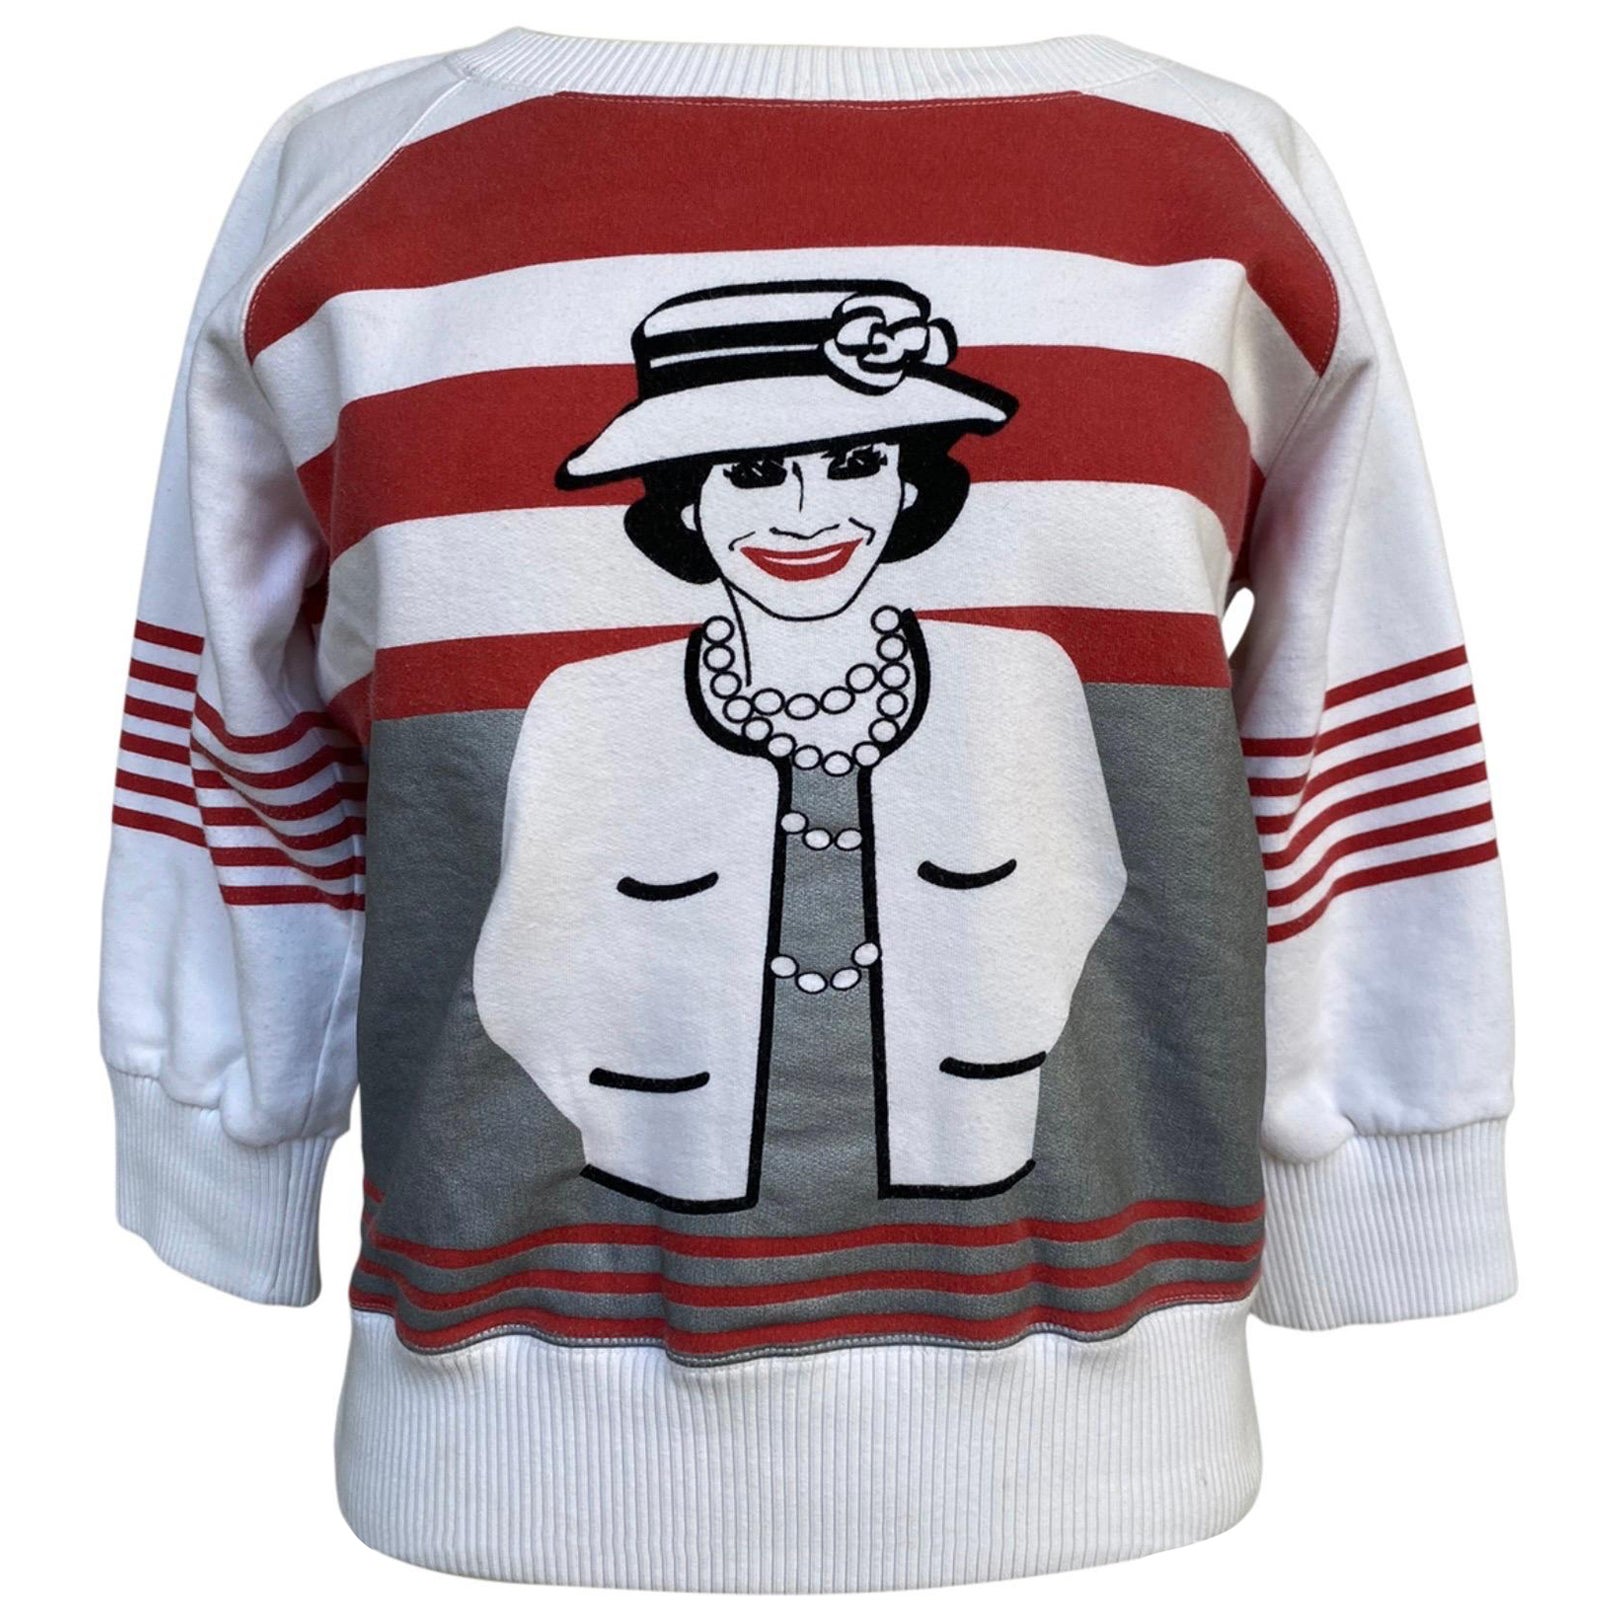 Coco Chanel Sweatshirt - 3 For Sale on 1stDibs